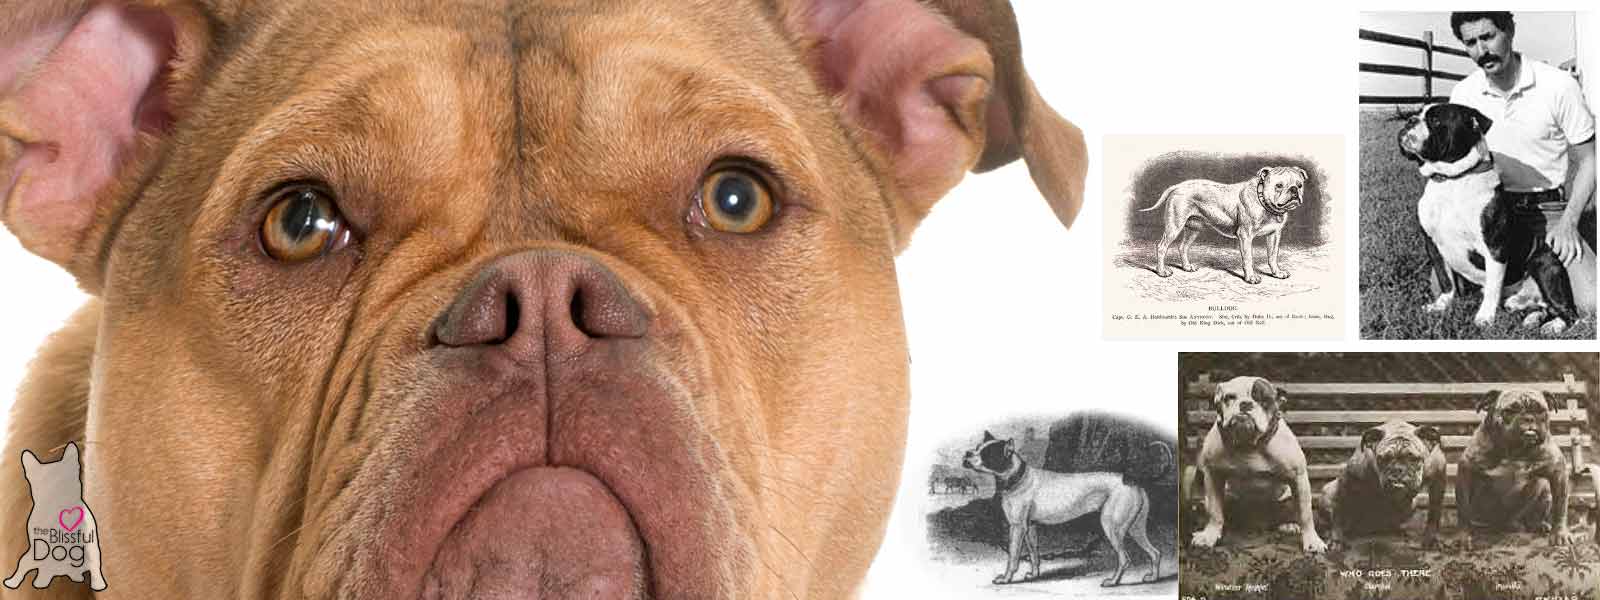 Leavitt Bulldog or Olde English Bulldogge